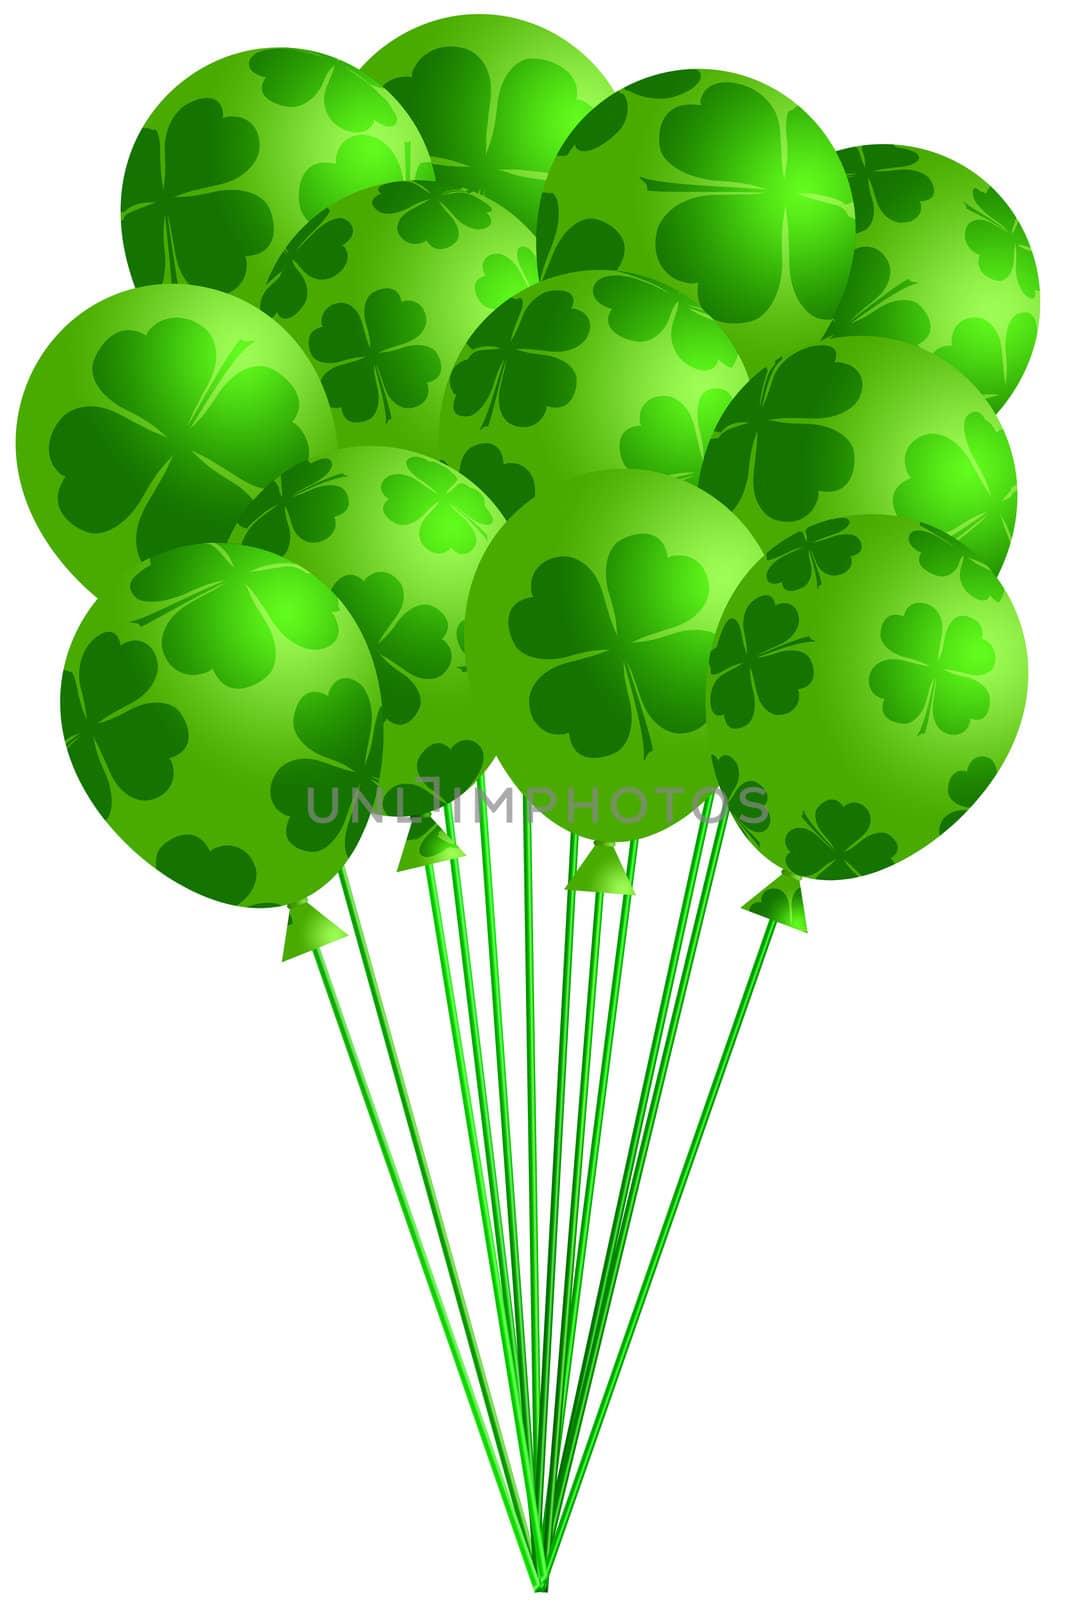 Bunch of Irish Green Balloons with Shamrocks by jpldesigns